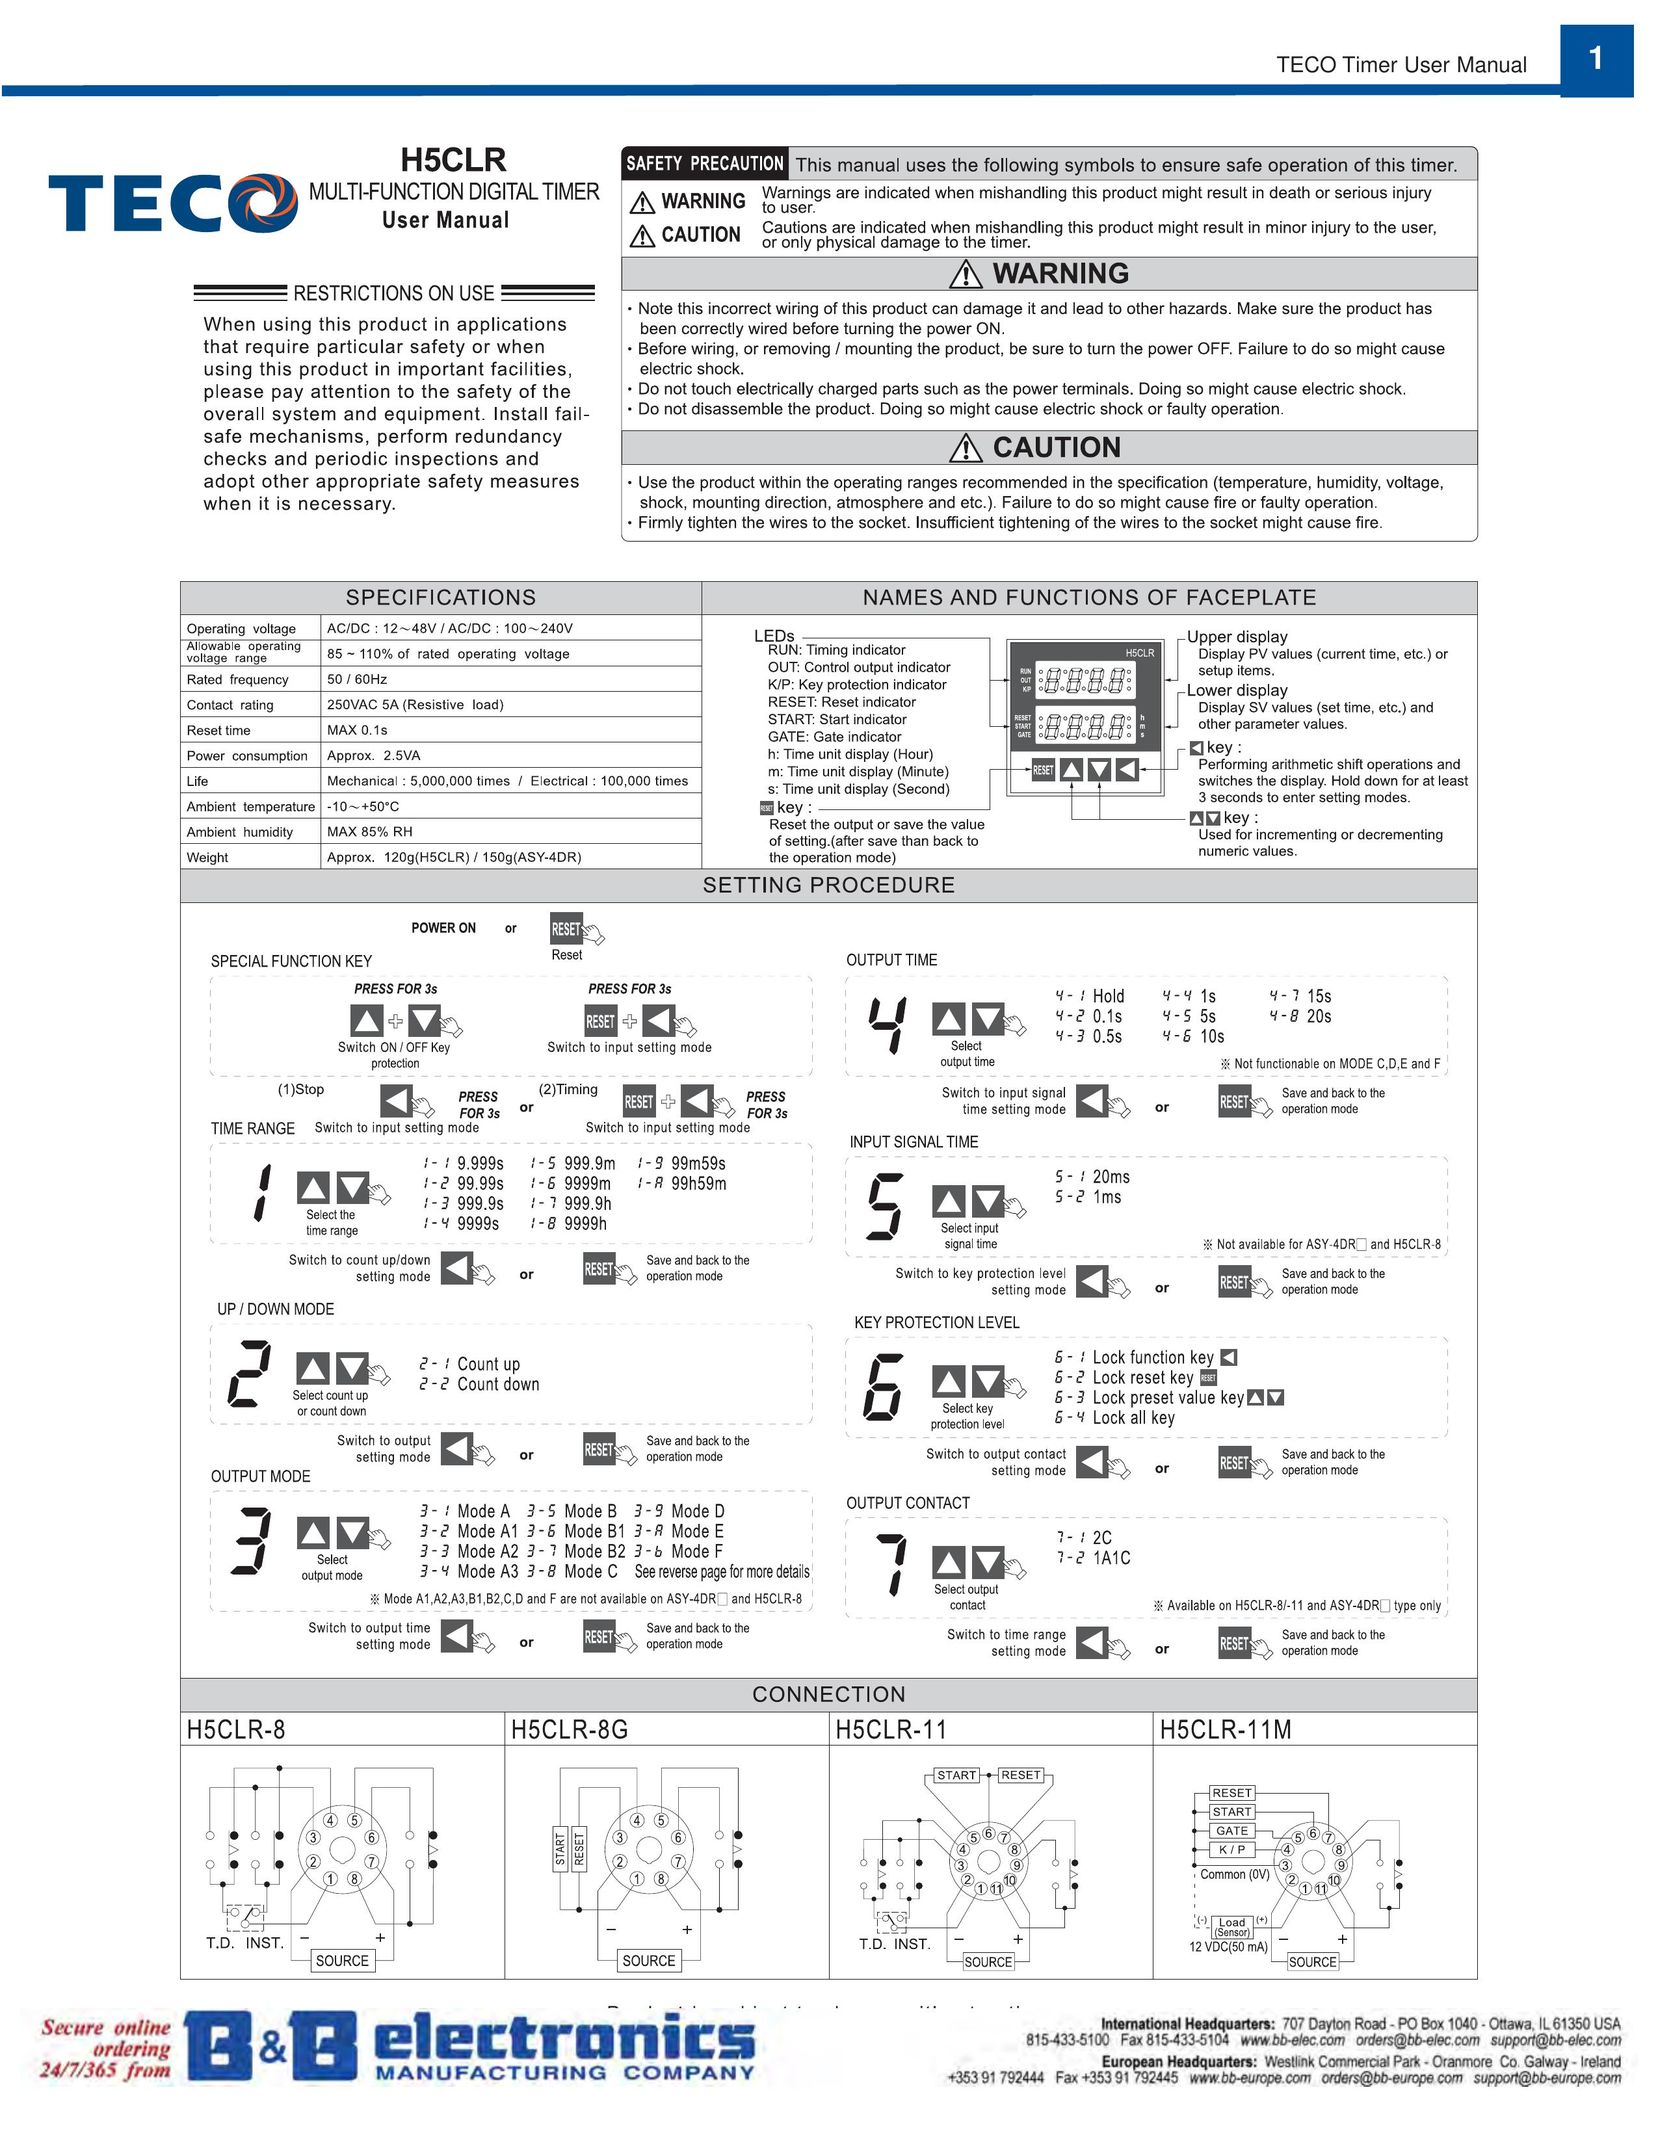 B&B Electronics H5CLR Clock User Manual